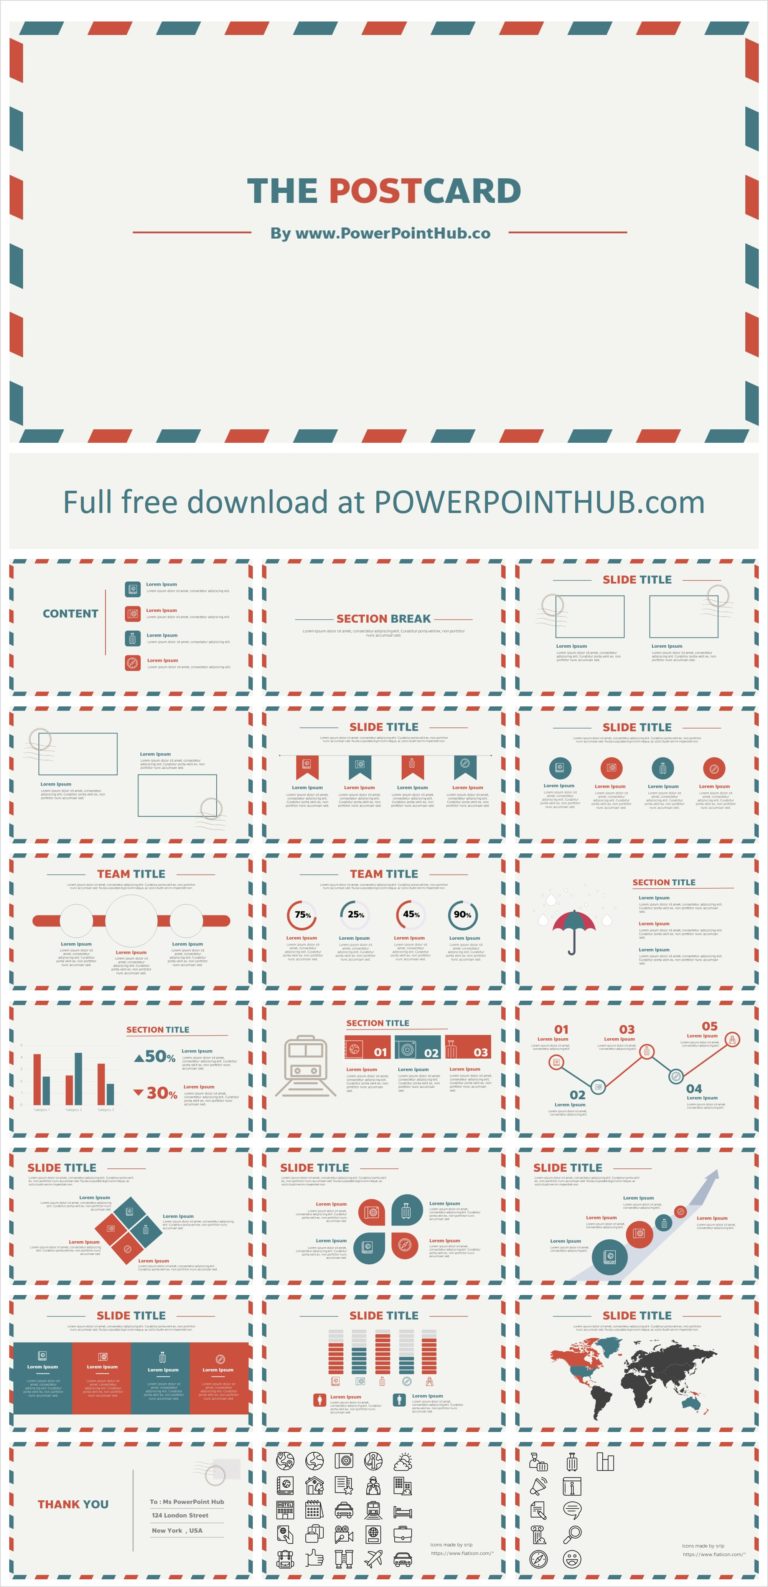 postcard-powerpoint-template-powerpoint-hub